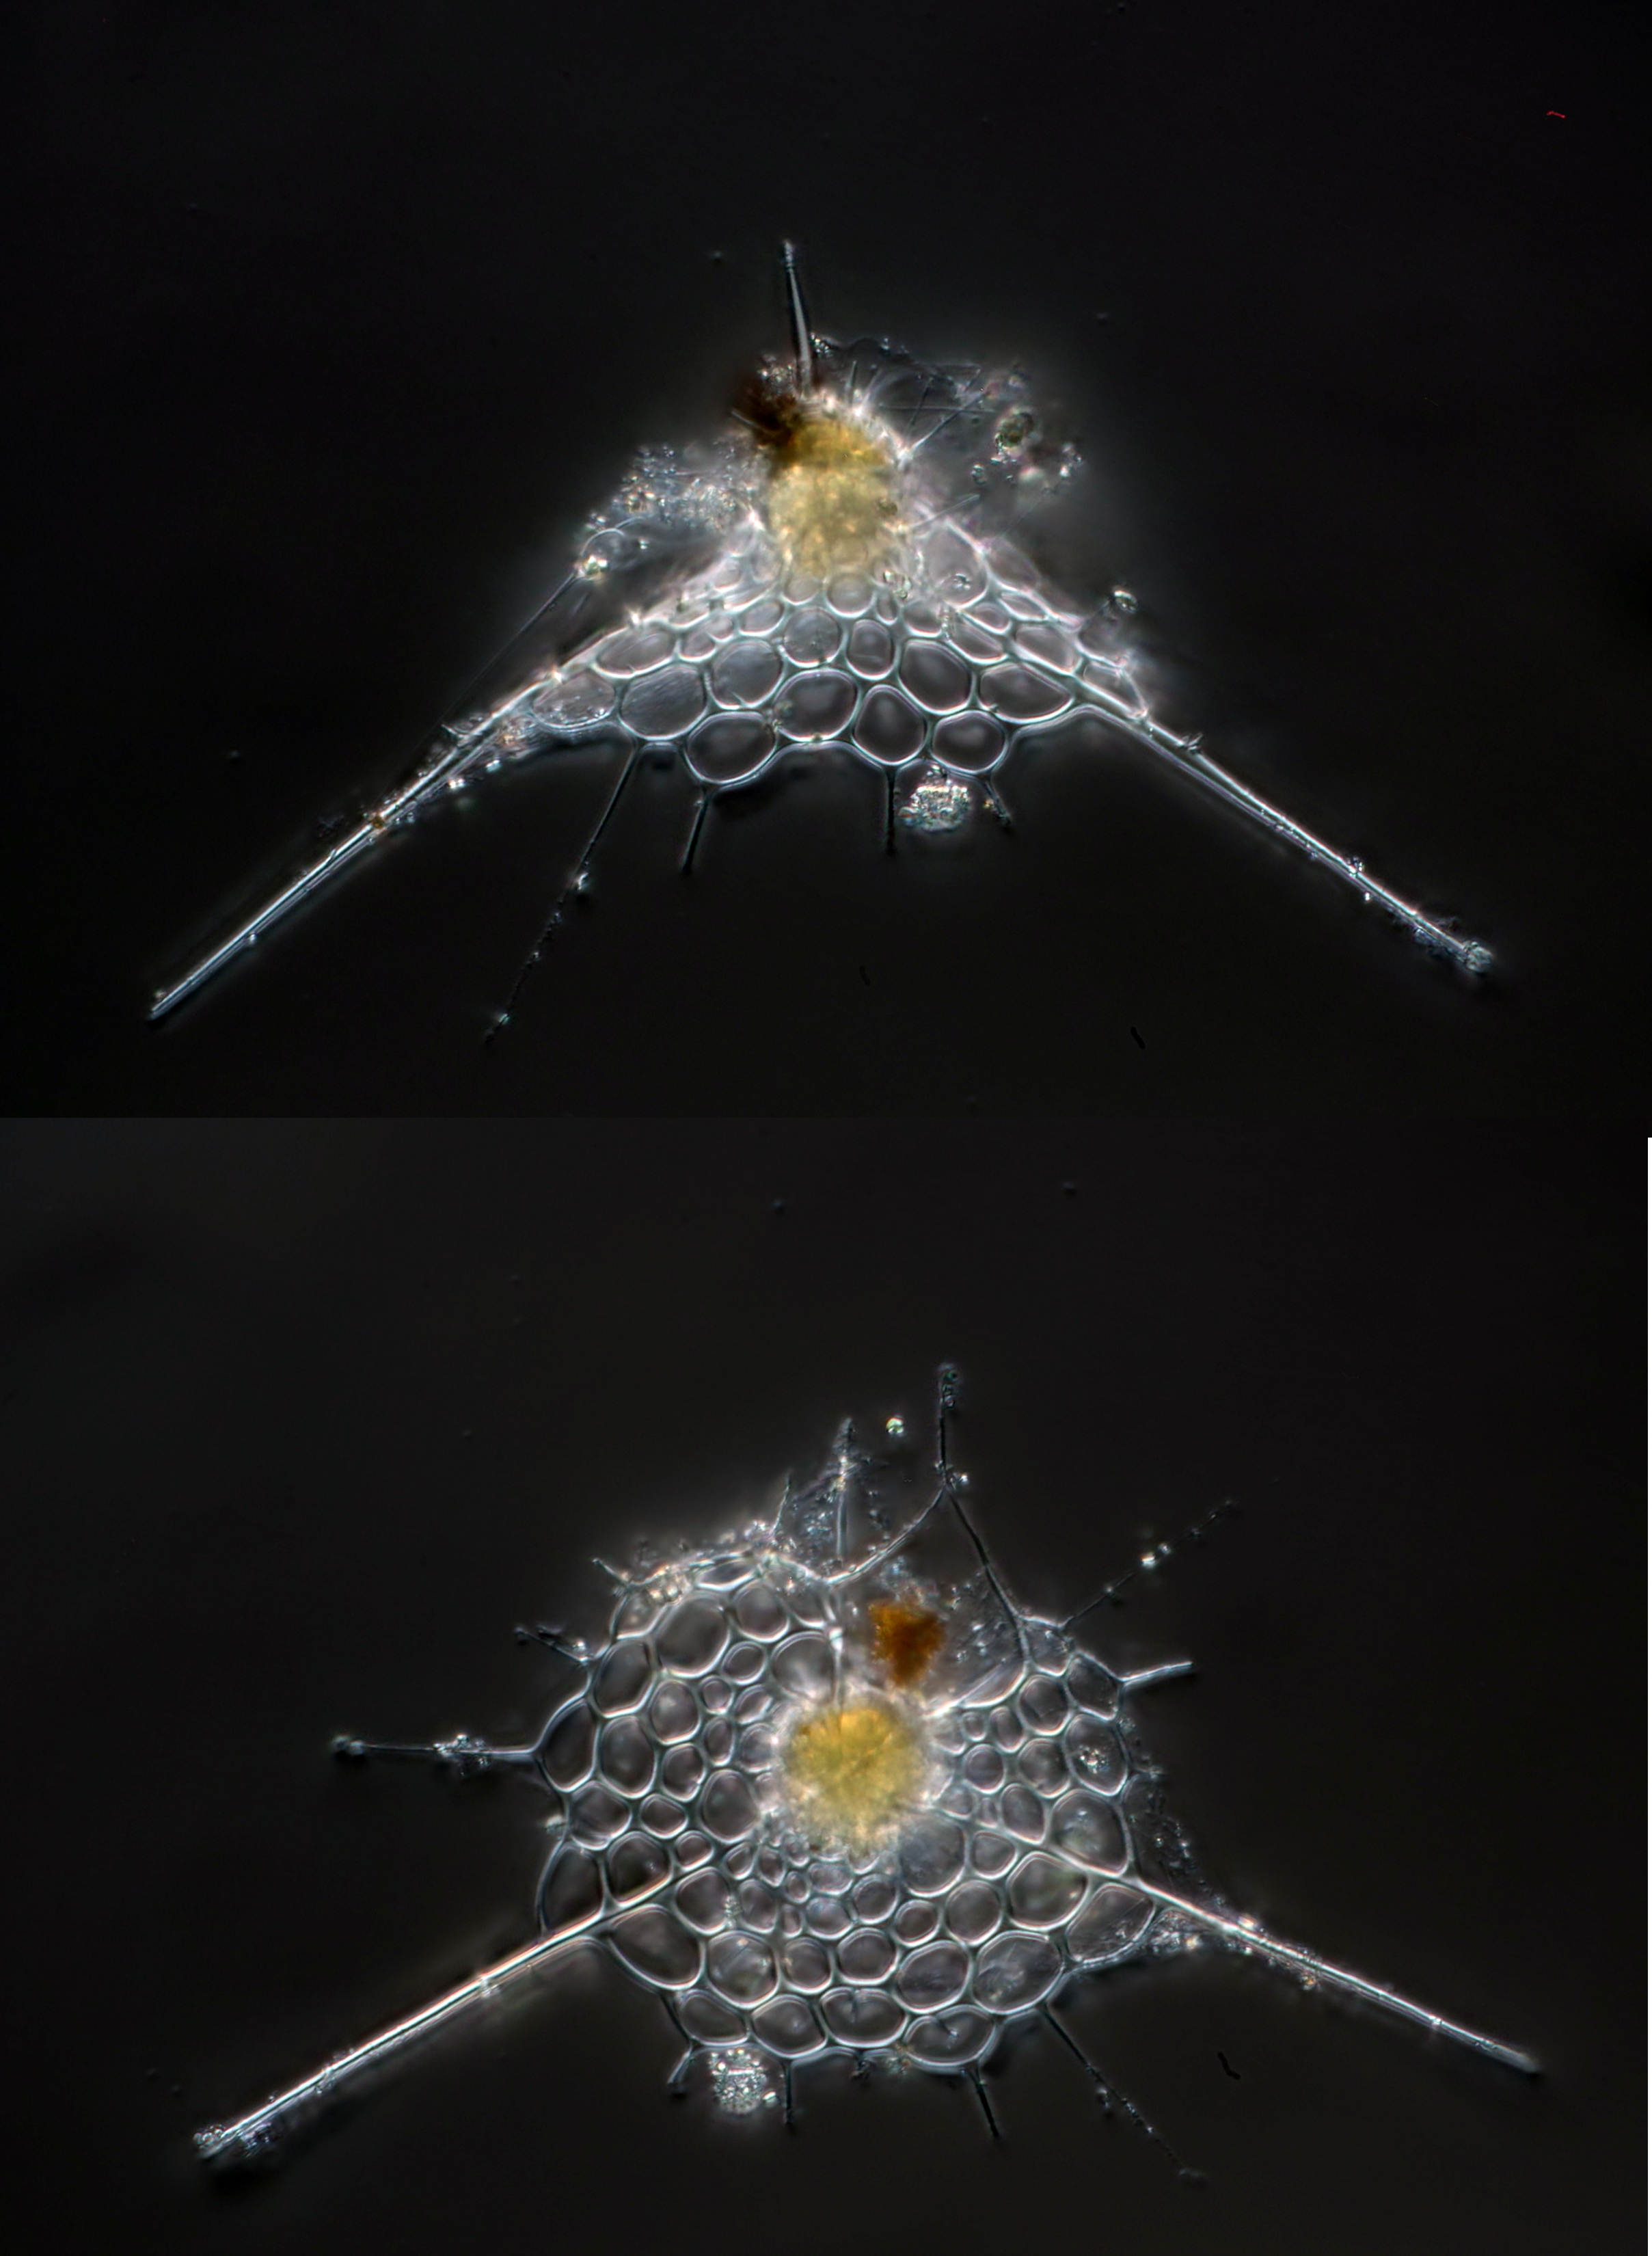 Tripodocyrtis platycephala (Haeckel, 1887)